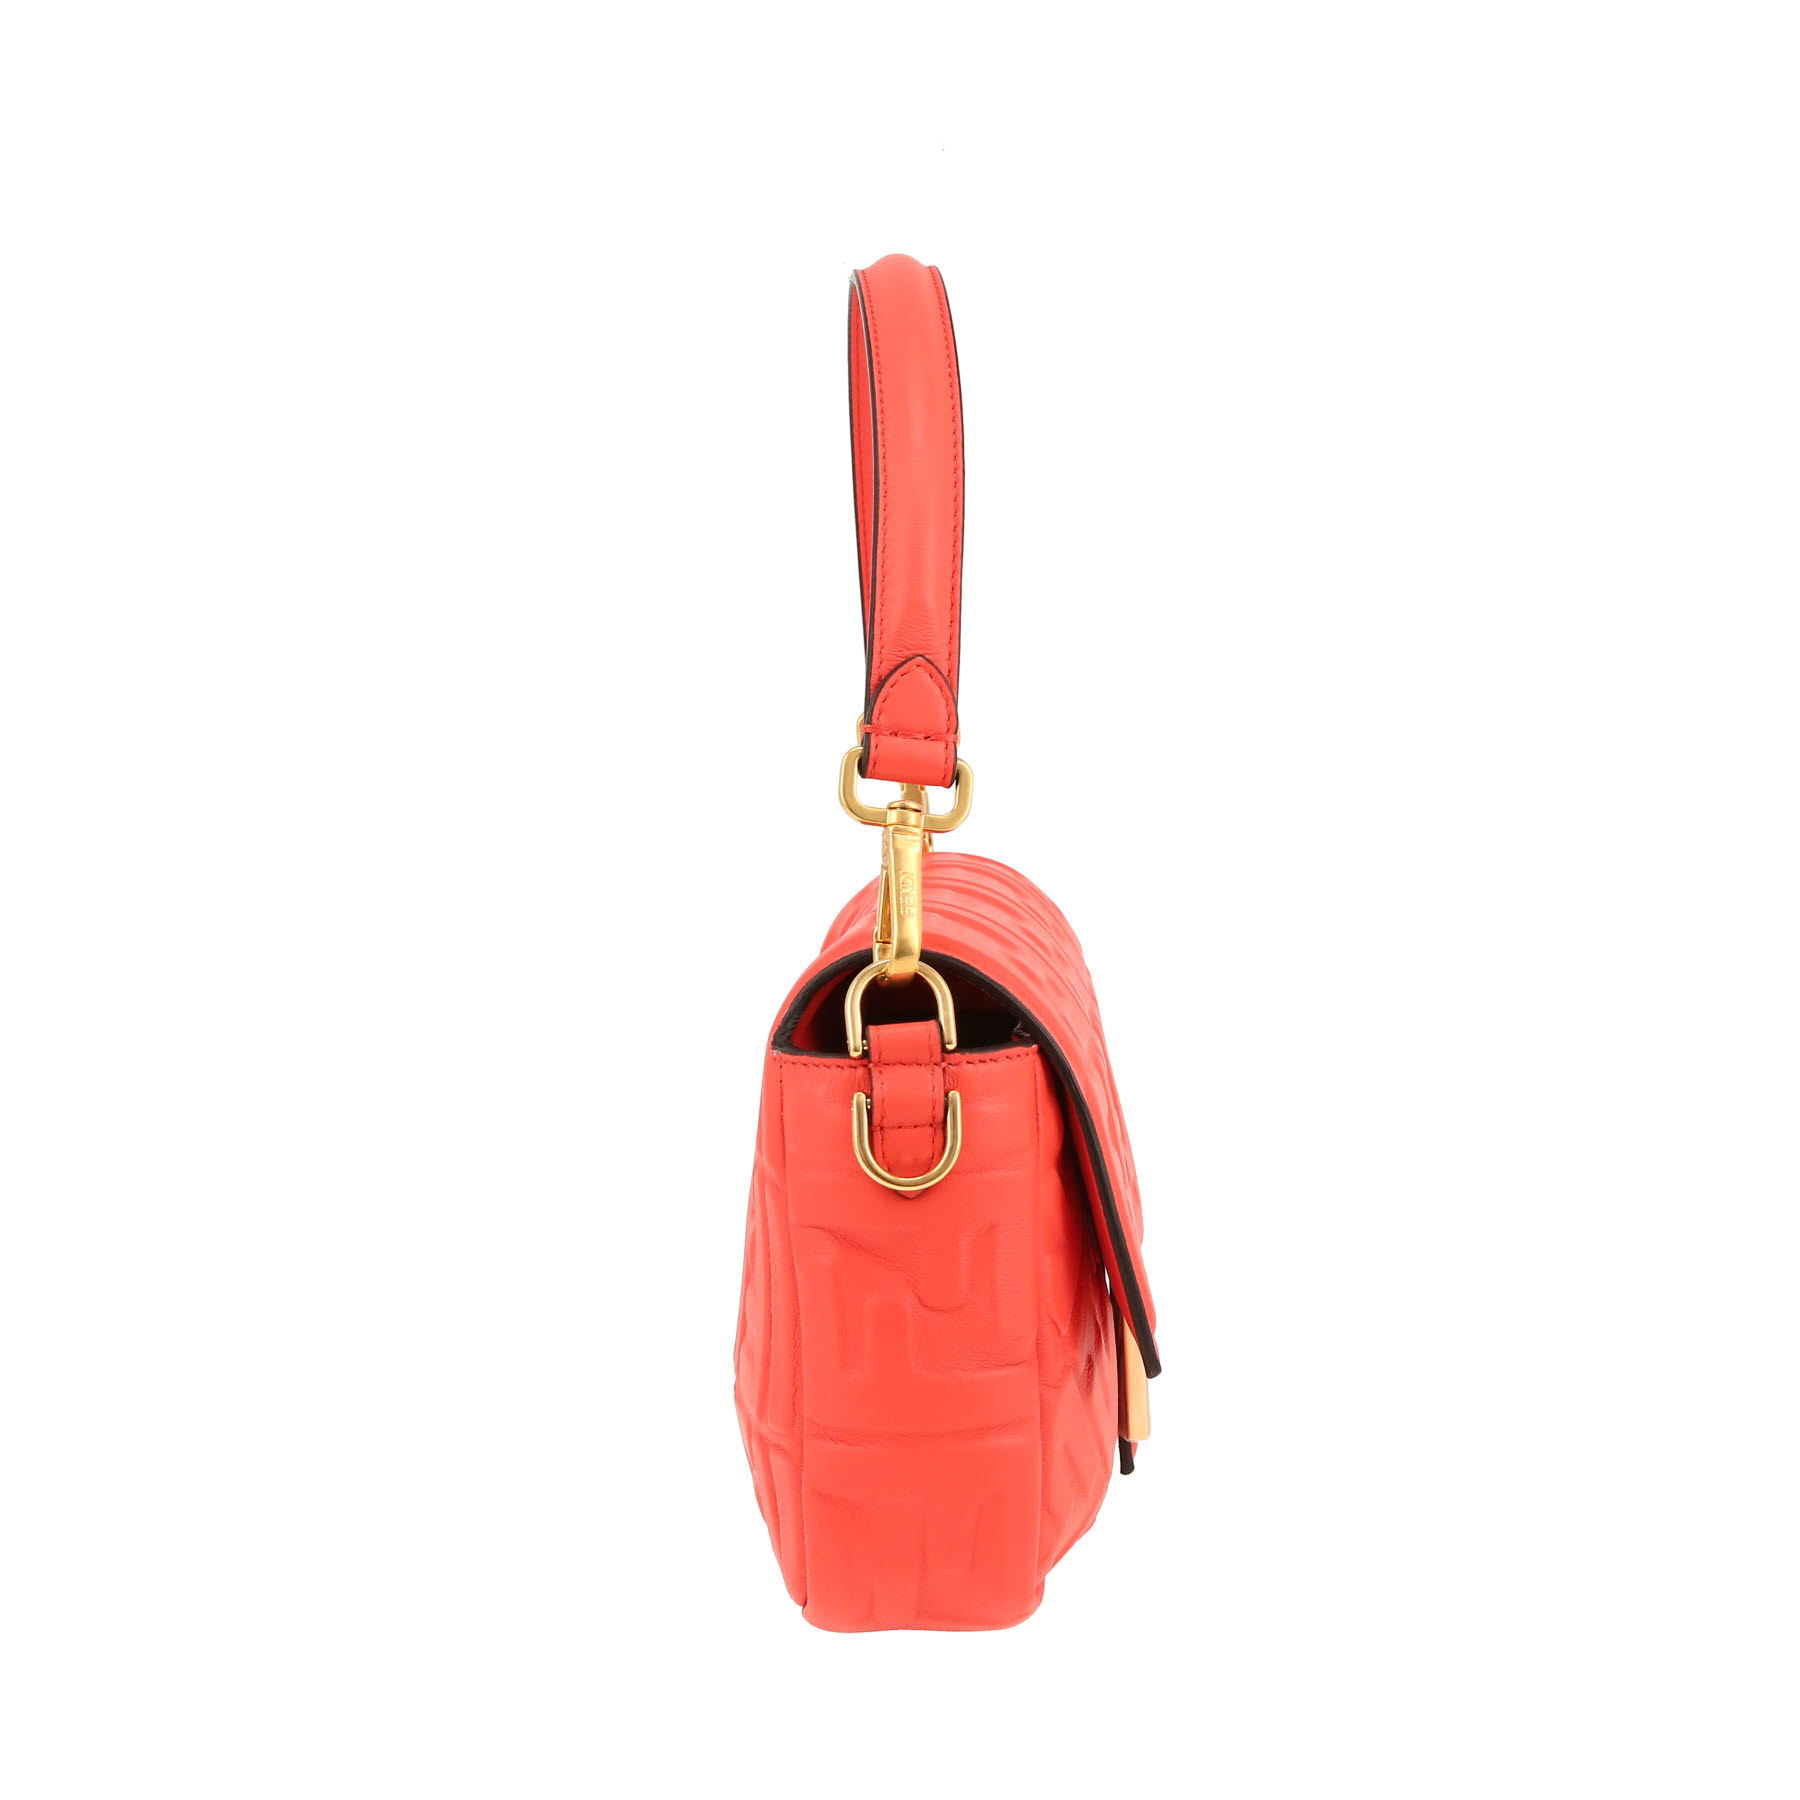 Baguette Handbag In Coral Leather